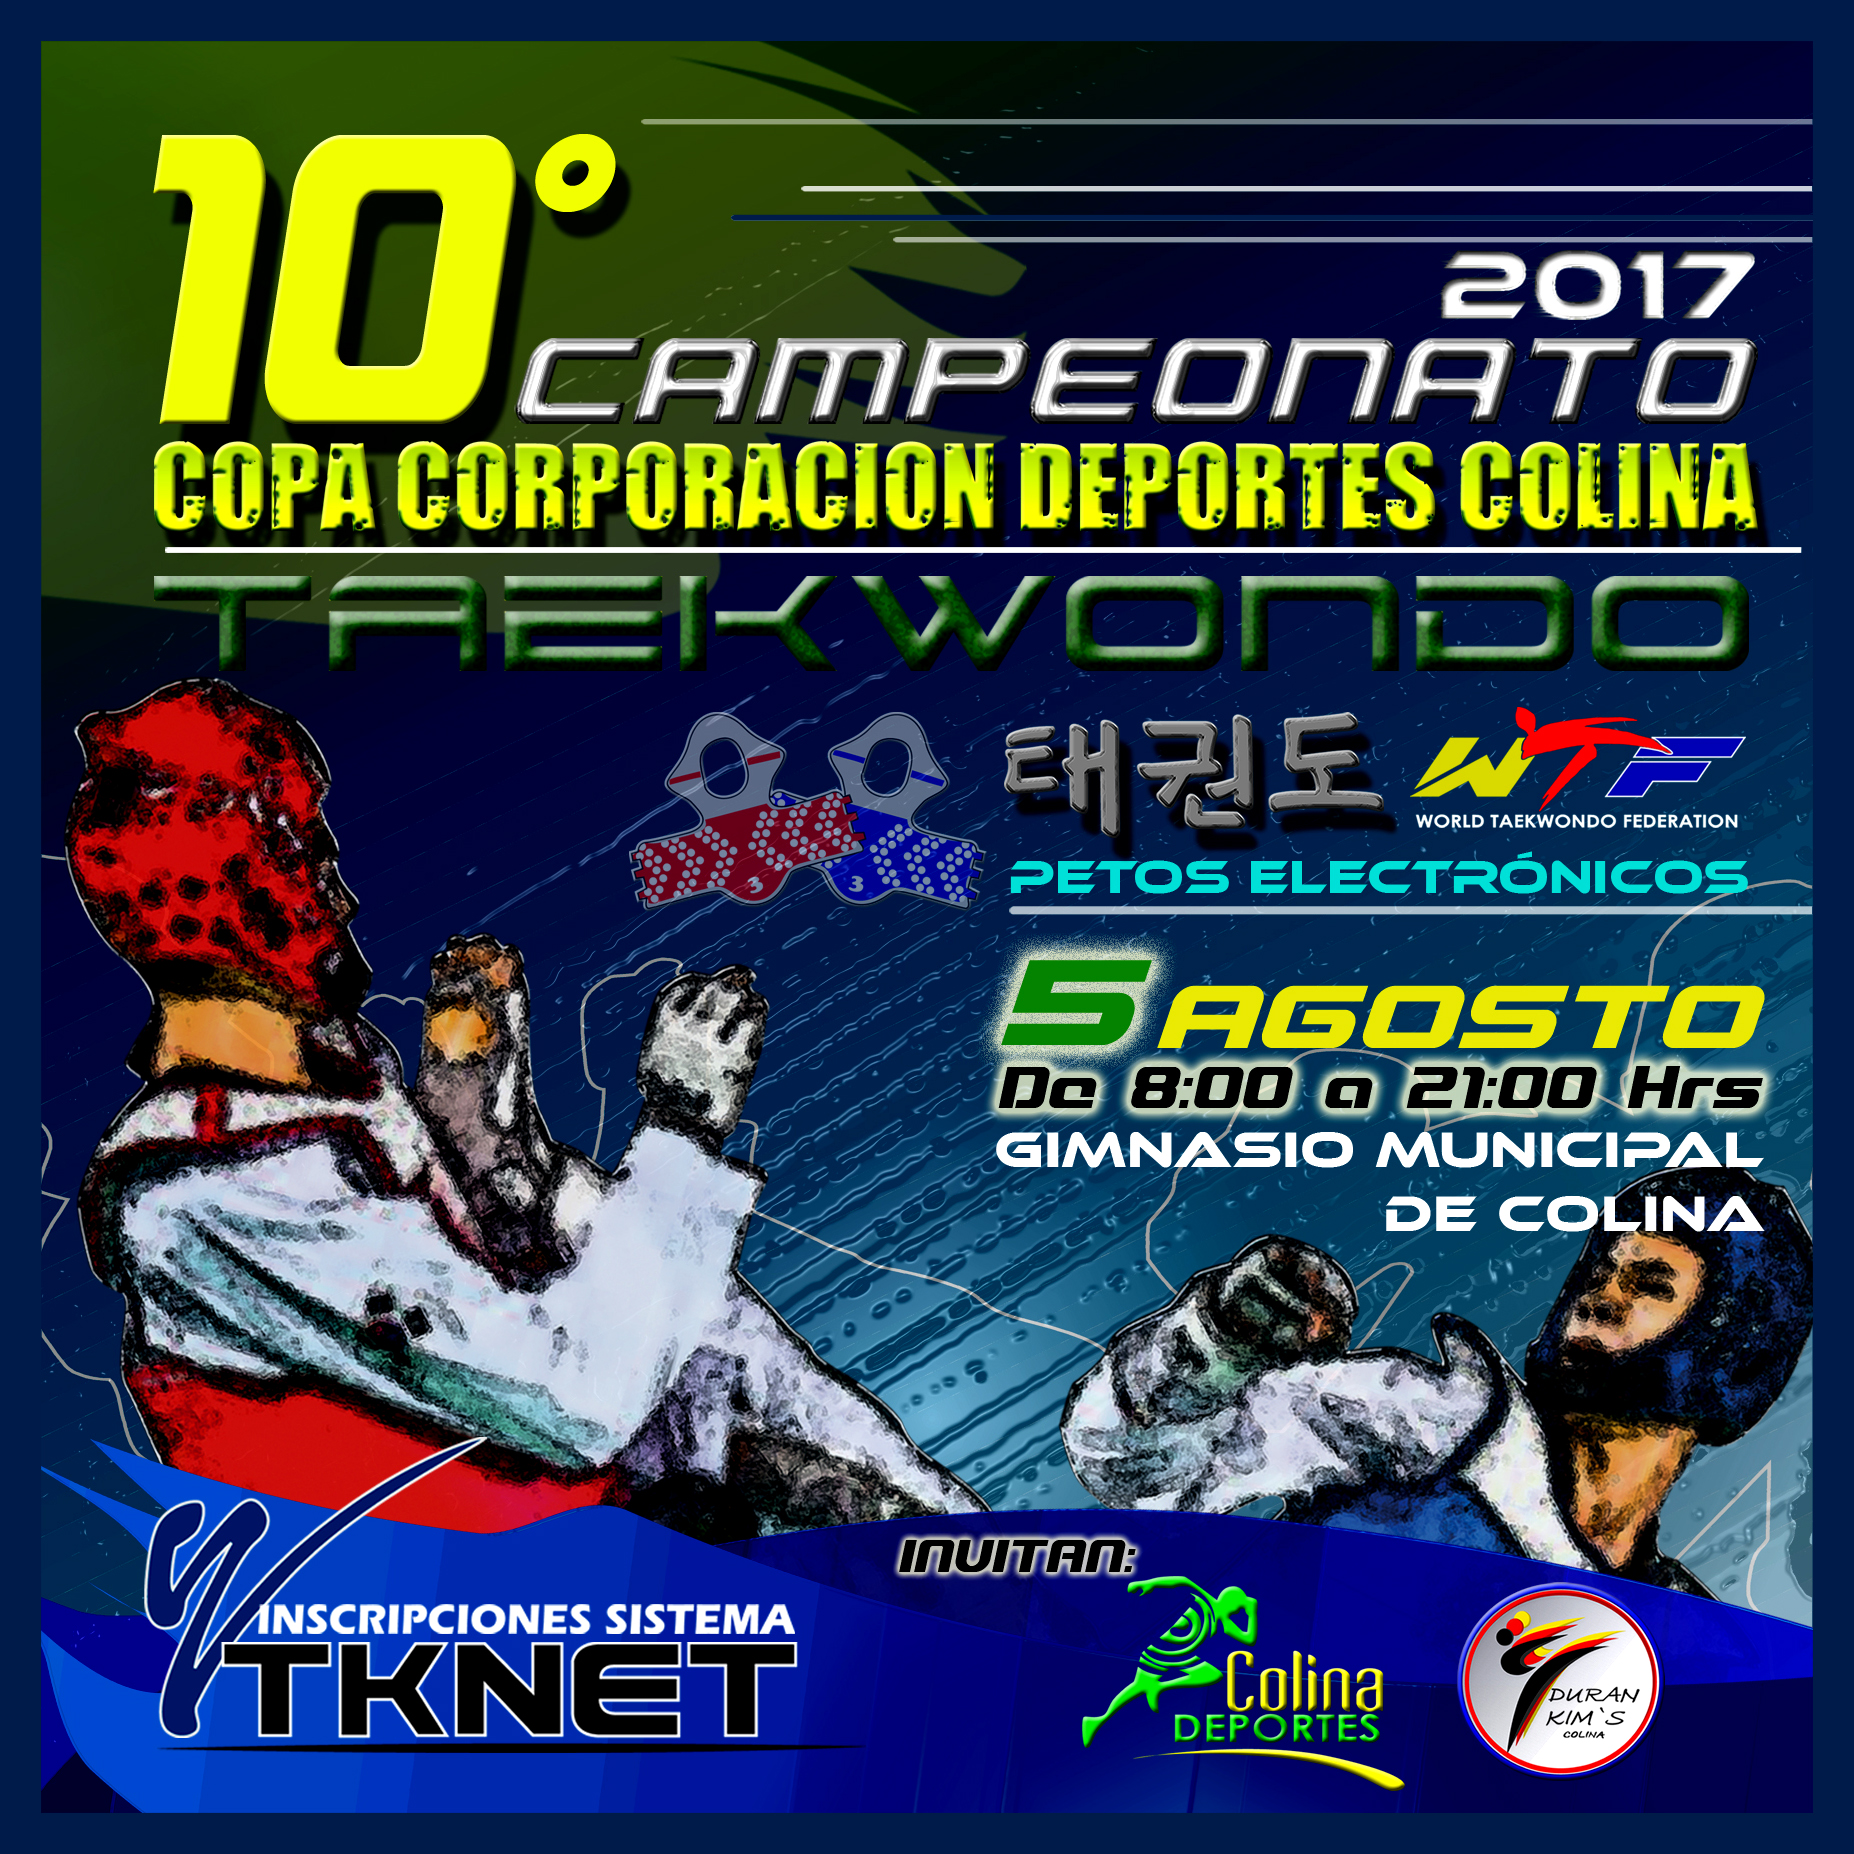 10º Campeonato Copa Corporacion de Colina 2017